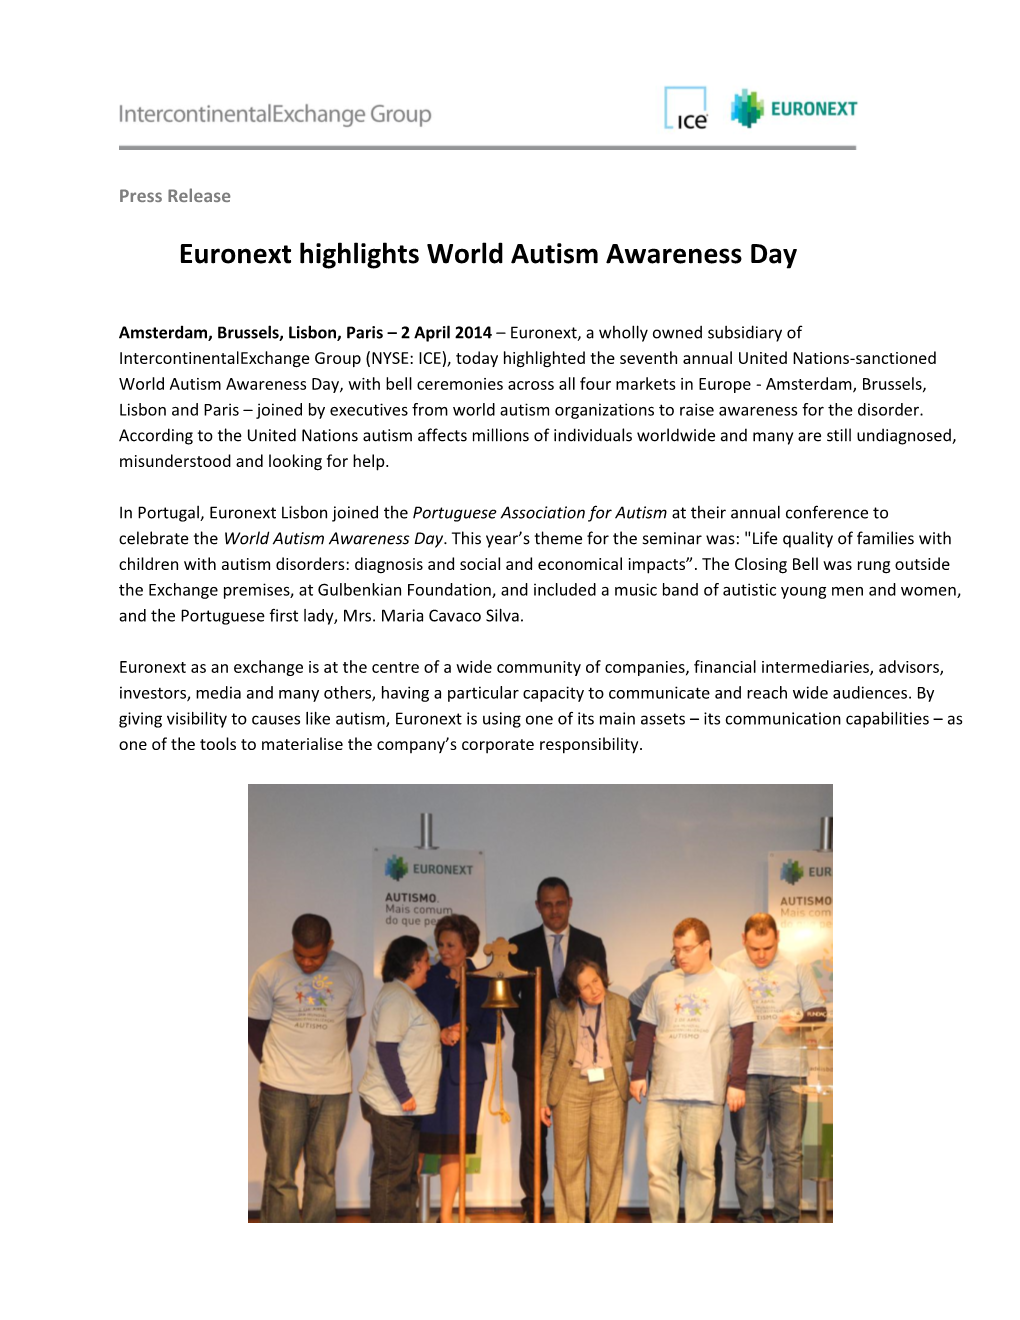 Euronext Highlights World Autism Awareness Day